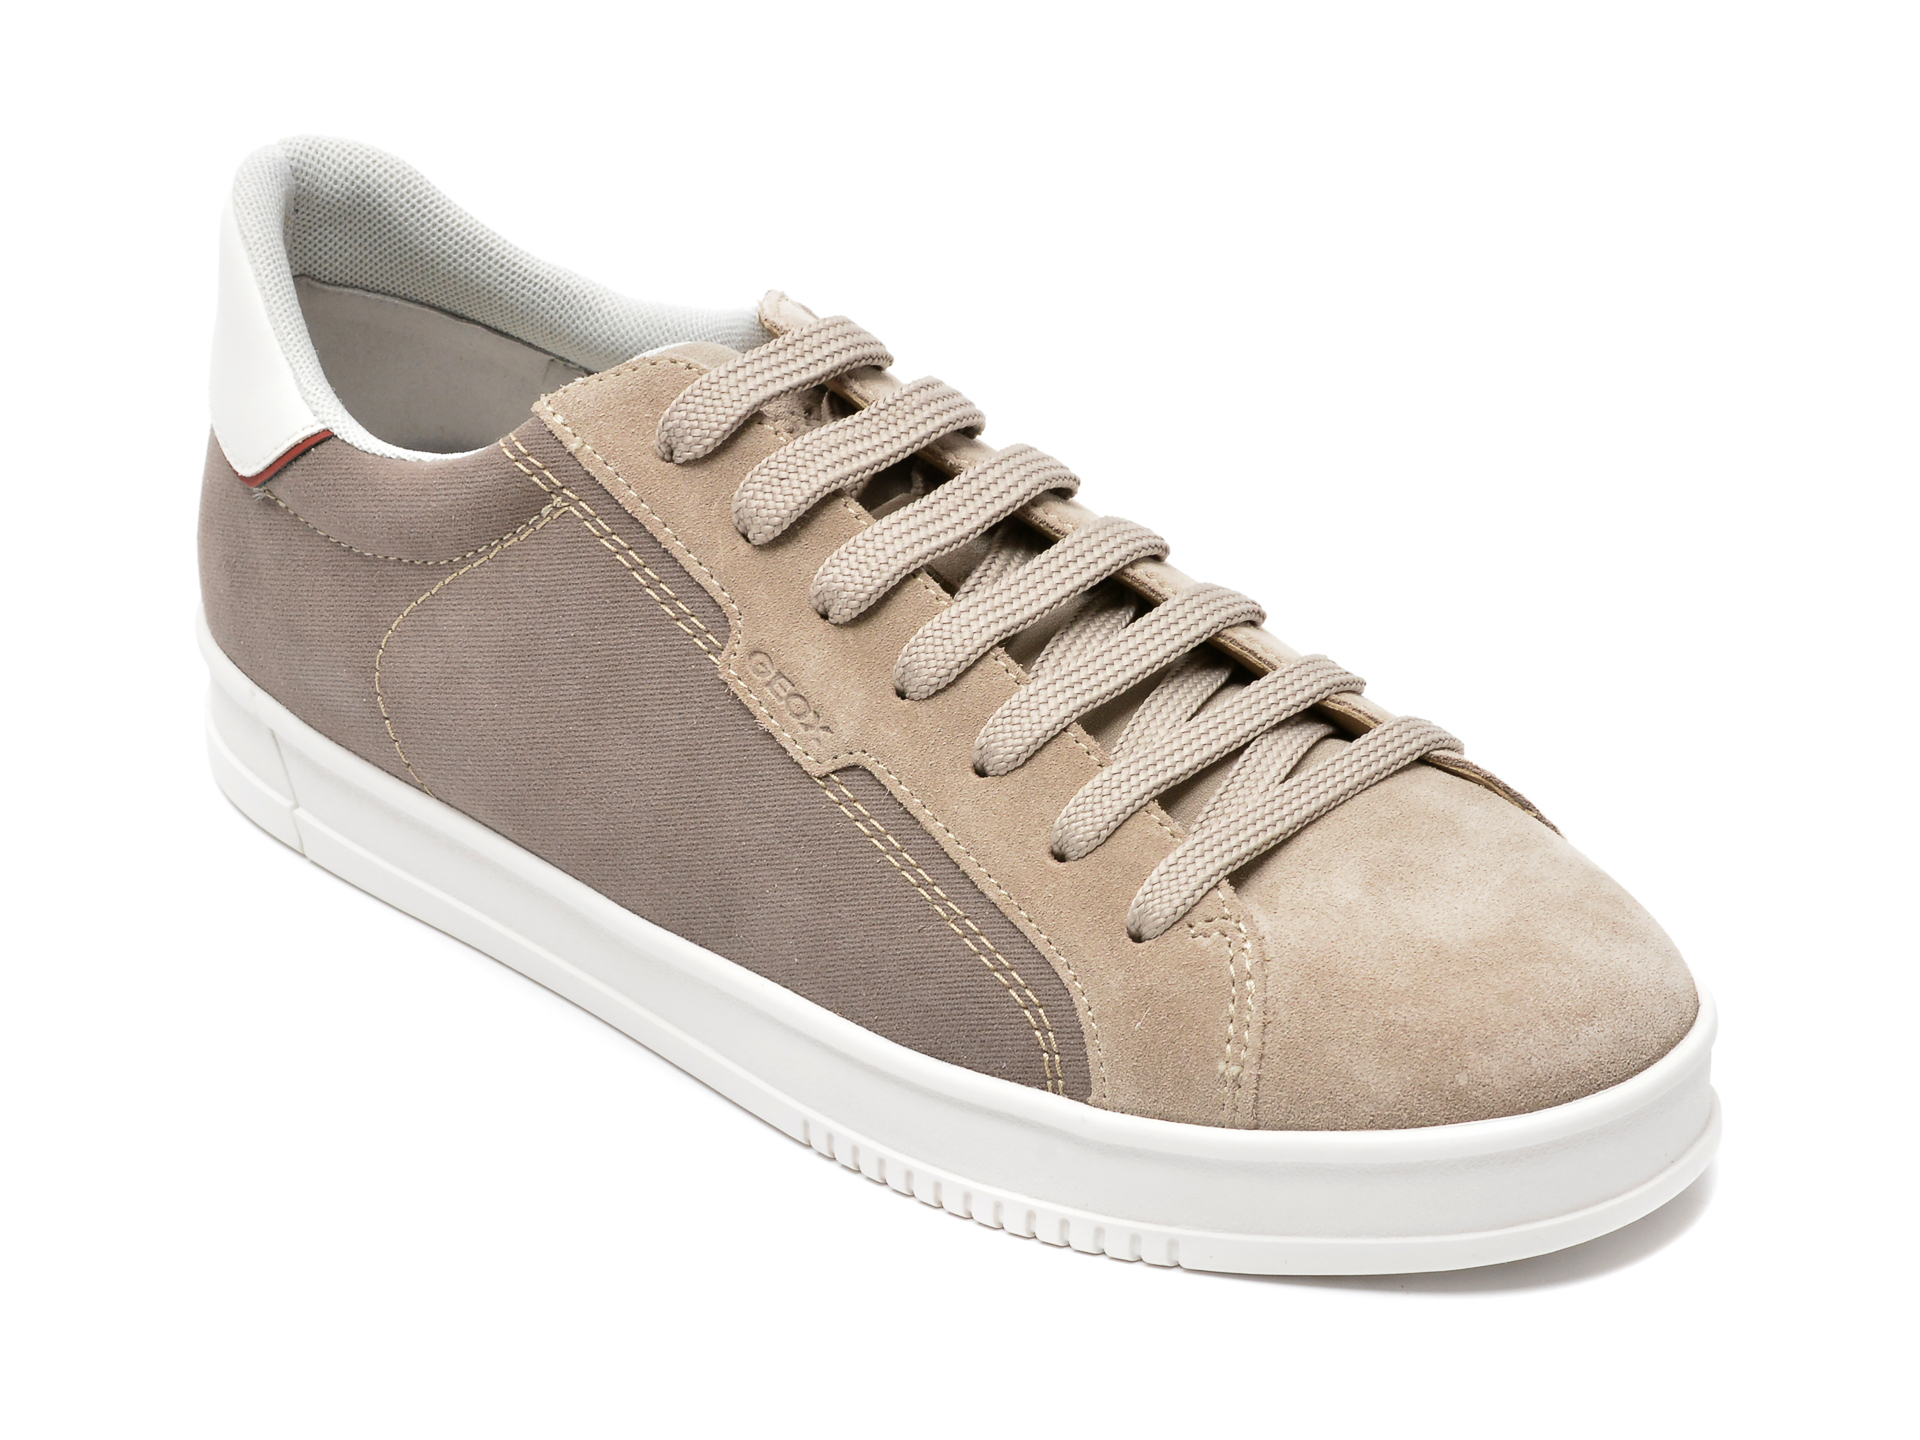 Pantofi Sport Geox Gri, U25etb, Din Material Textil Si Piele Naturala